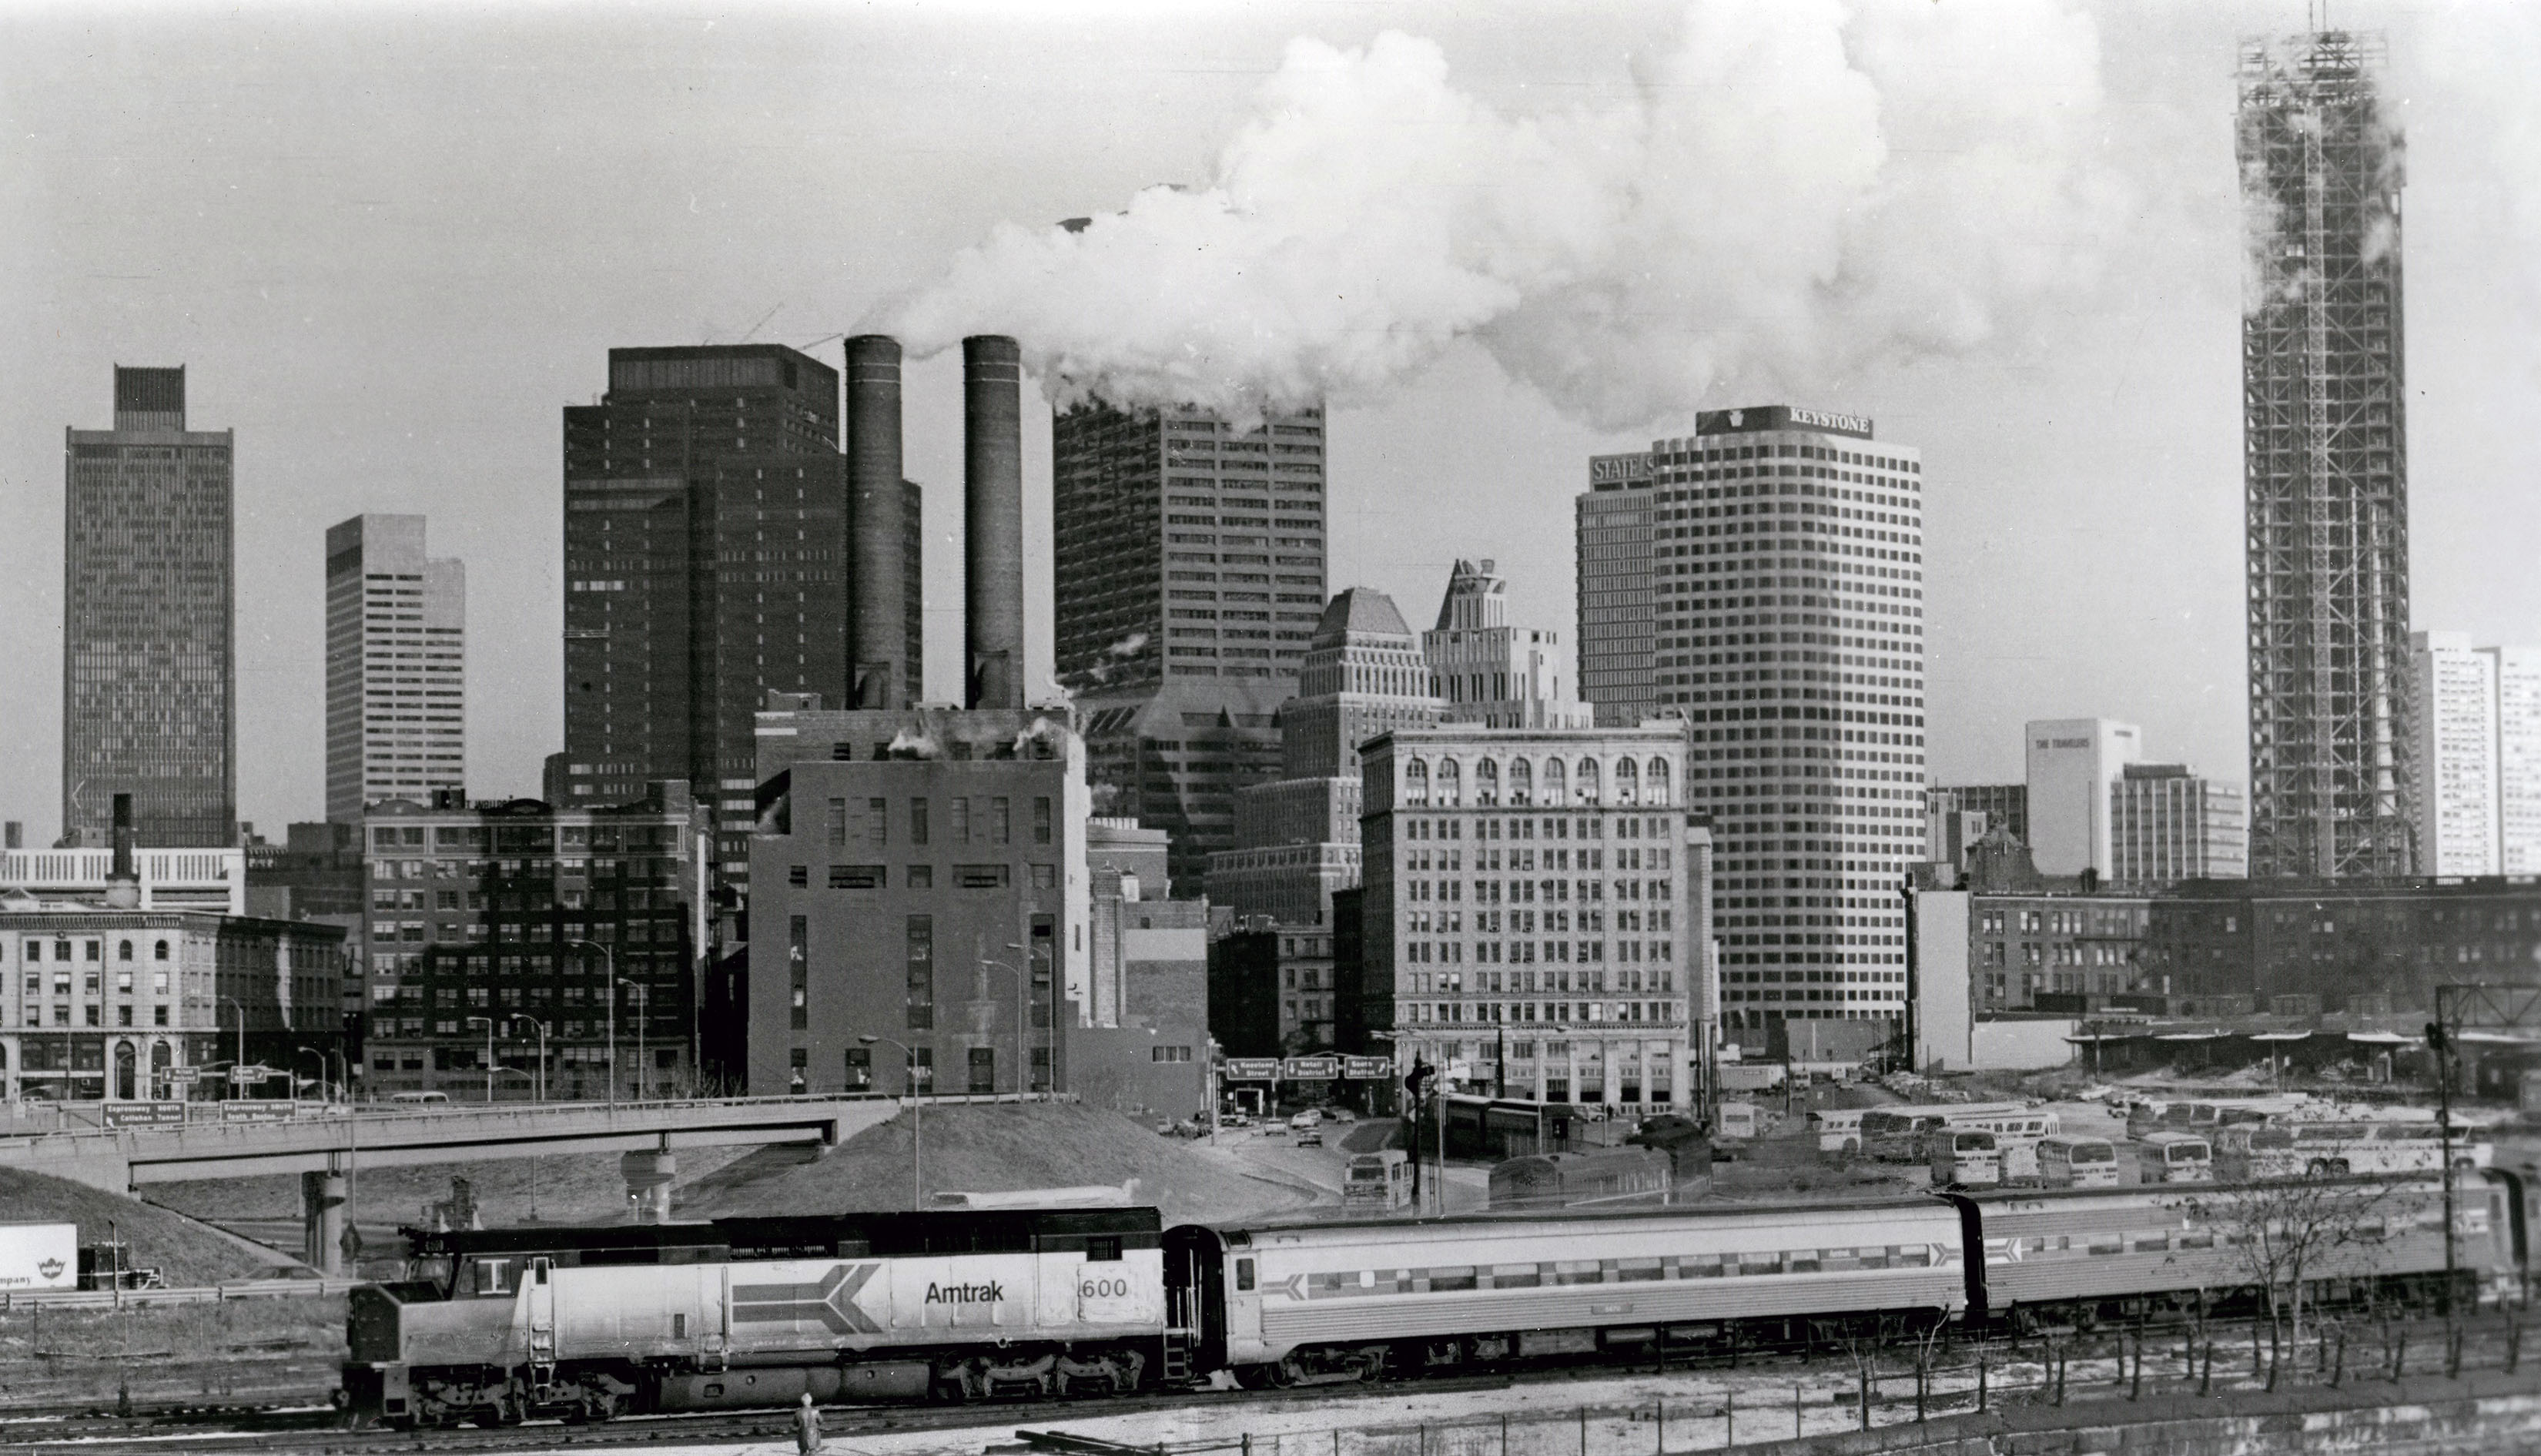 John Milenbaugh Shares his #AmtrakStories